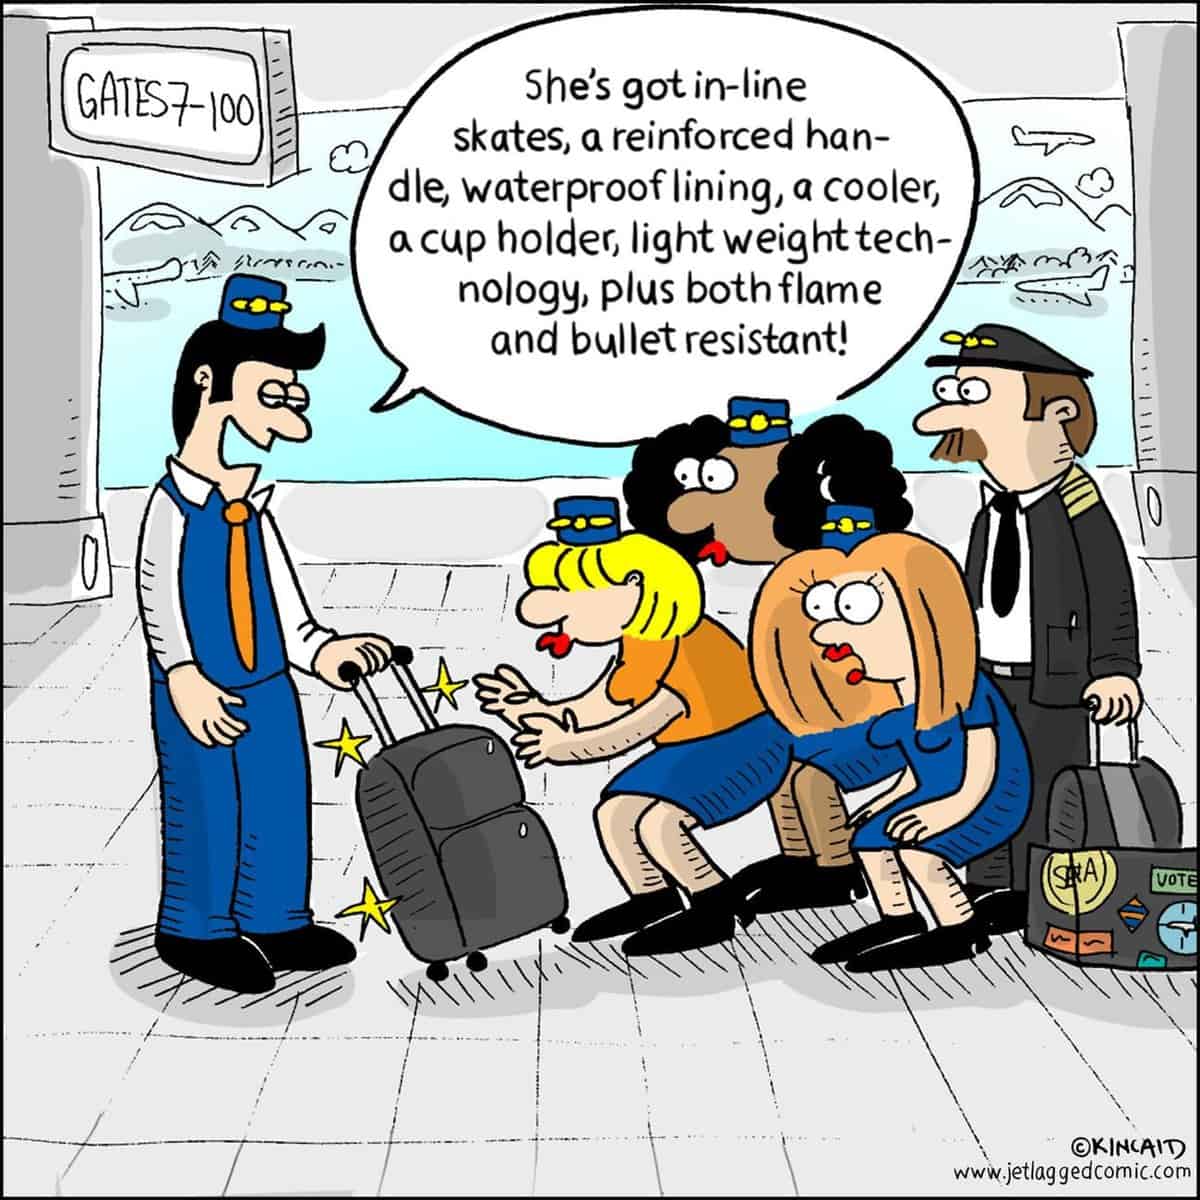 Comic flight attendant